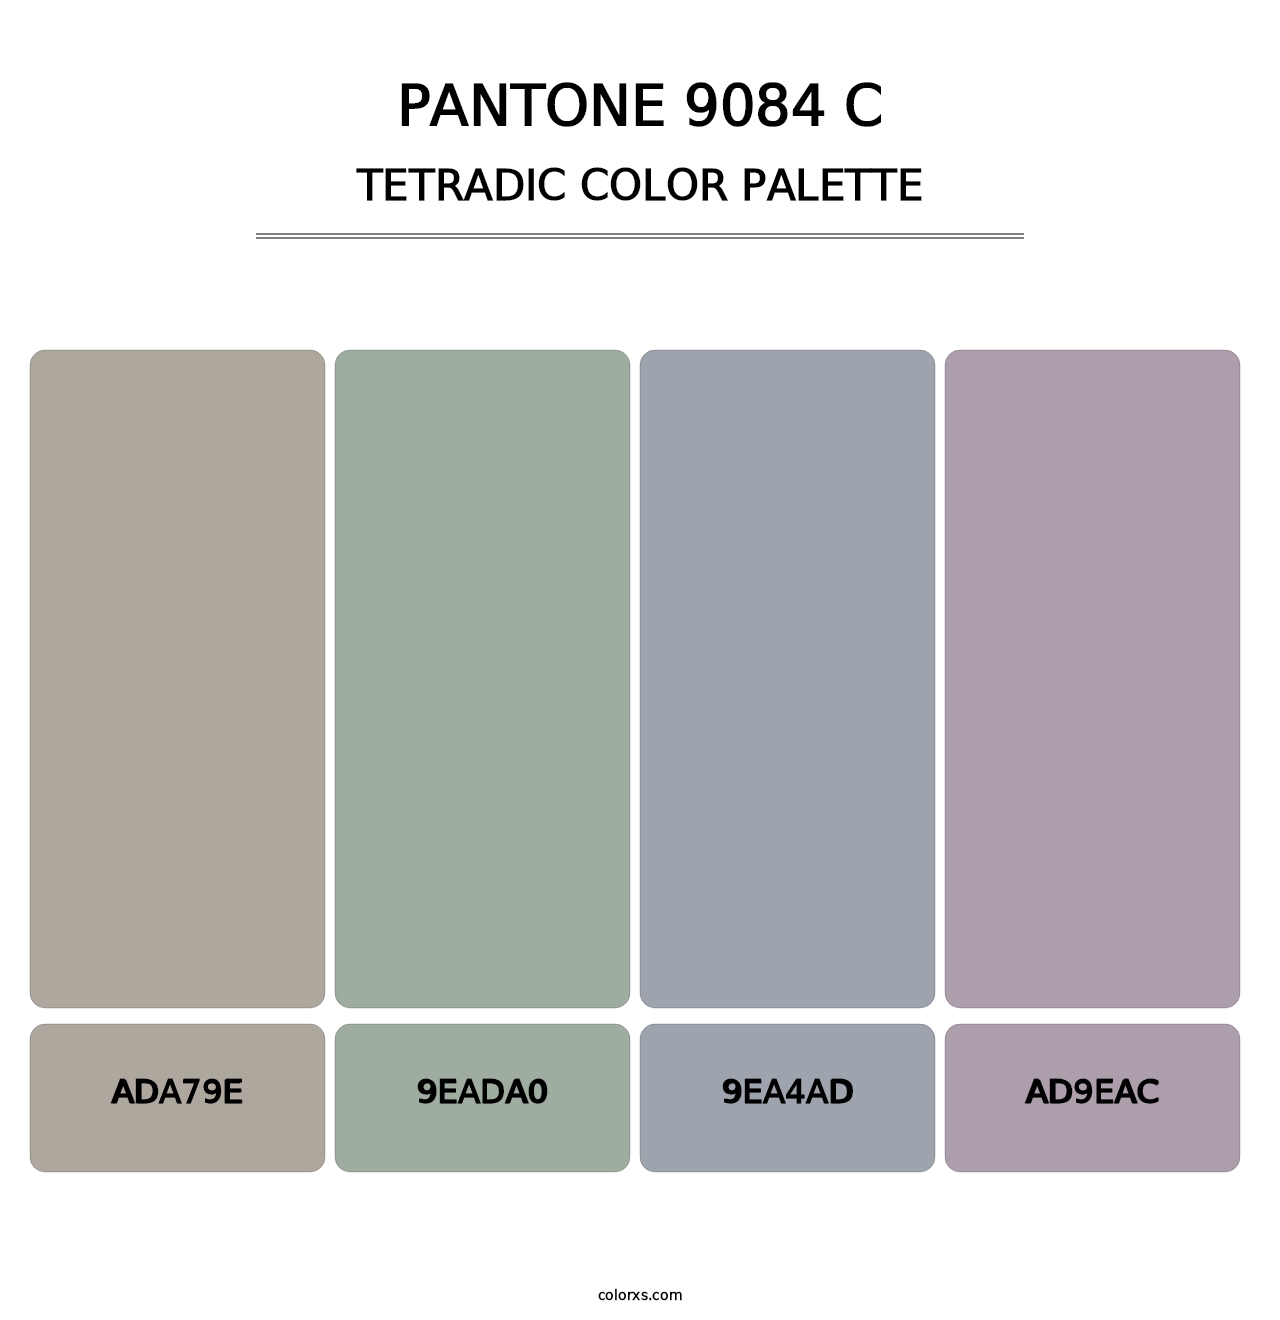 PANTONE 9084 C - Tetradic Color Palette